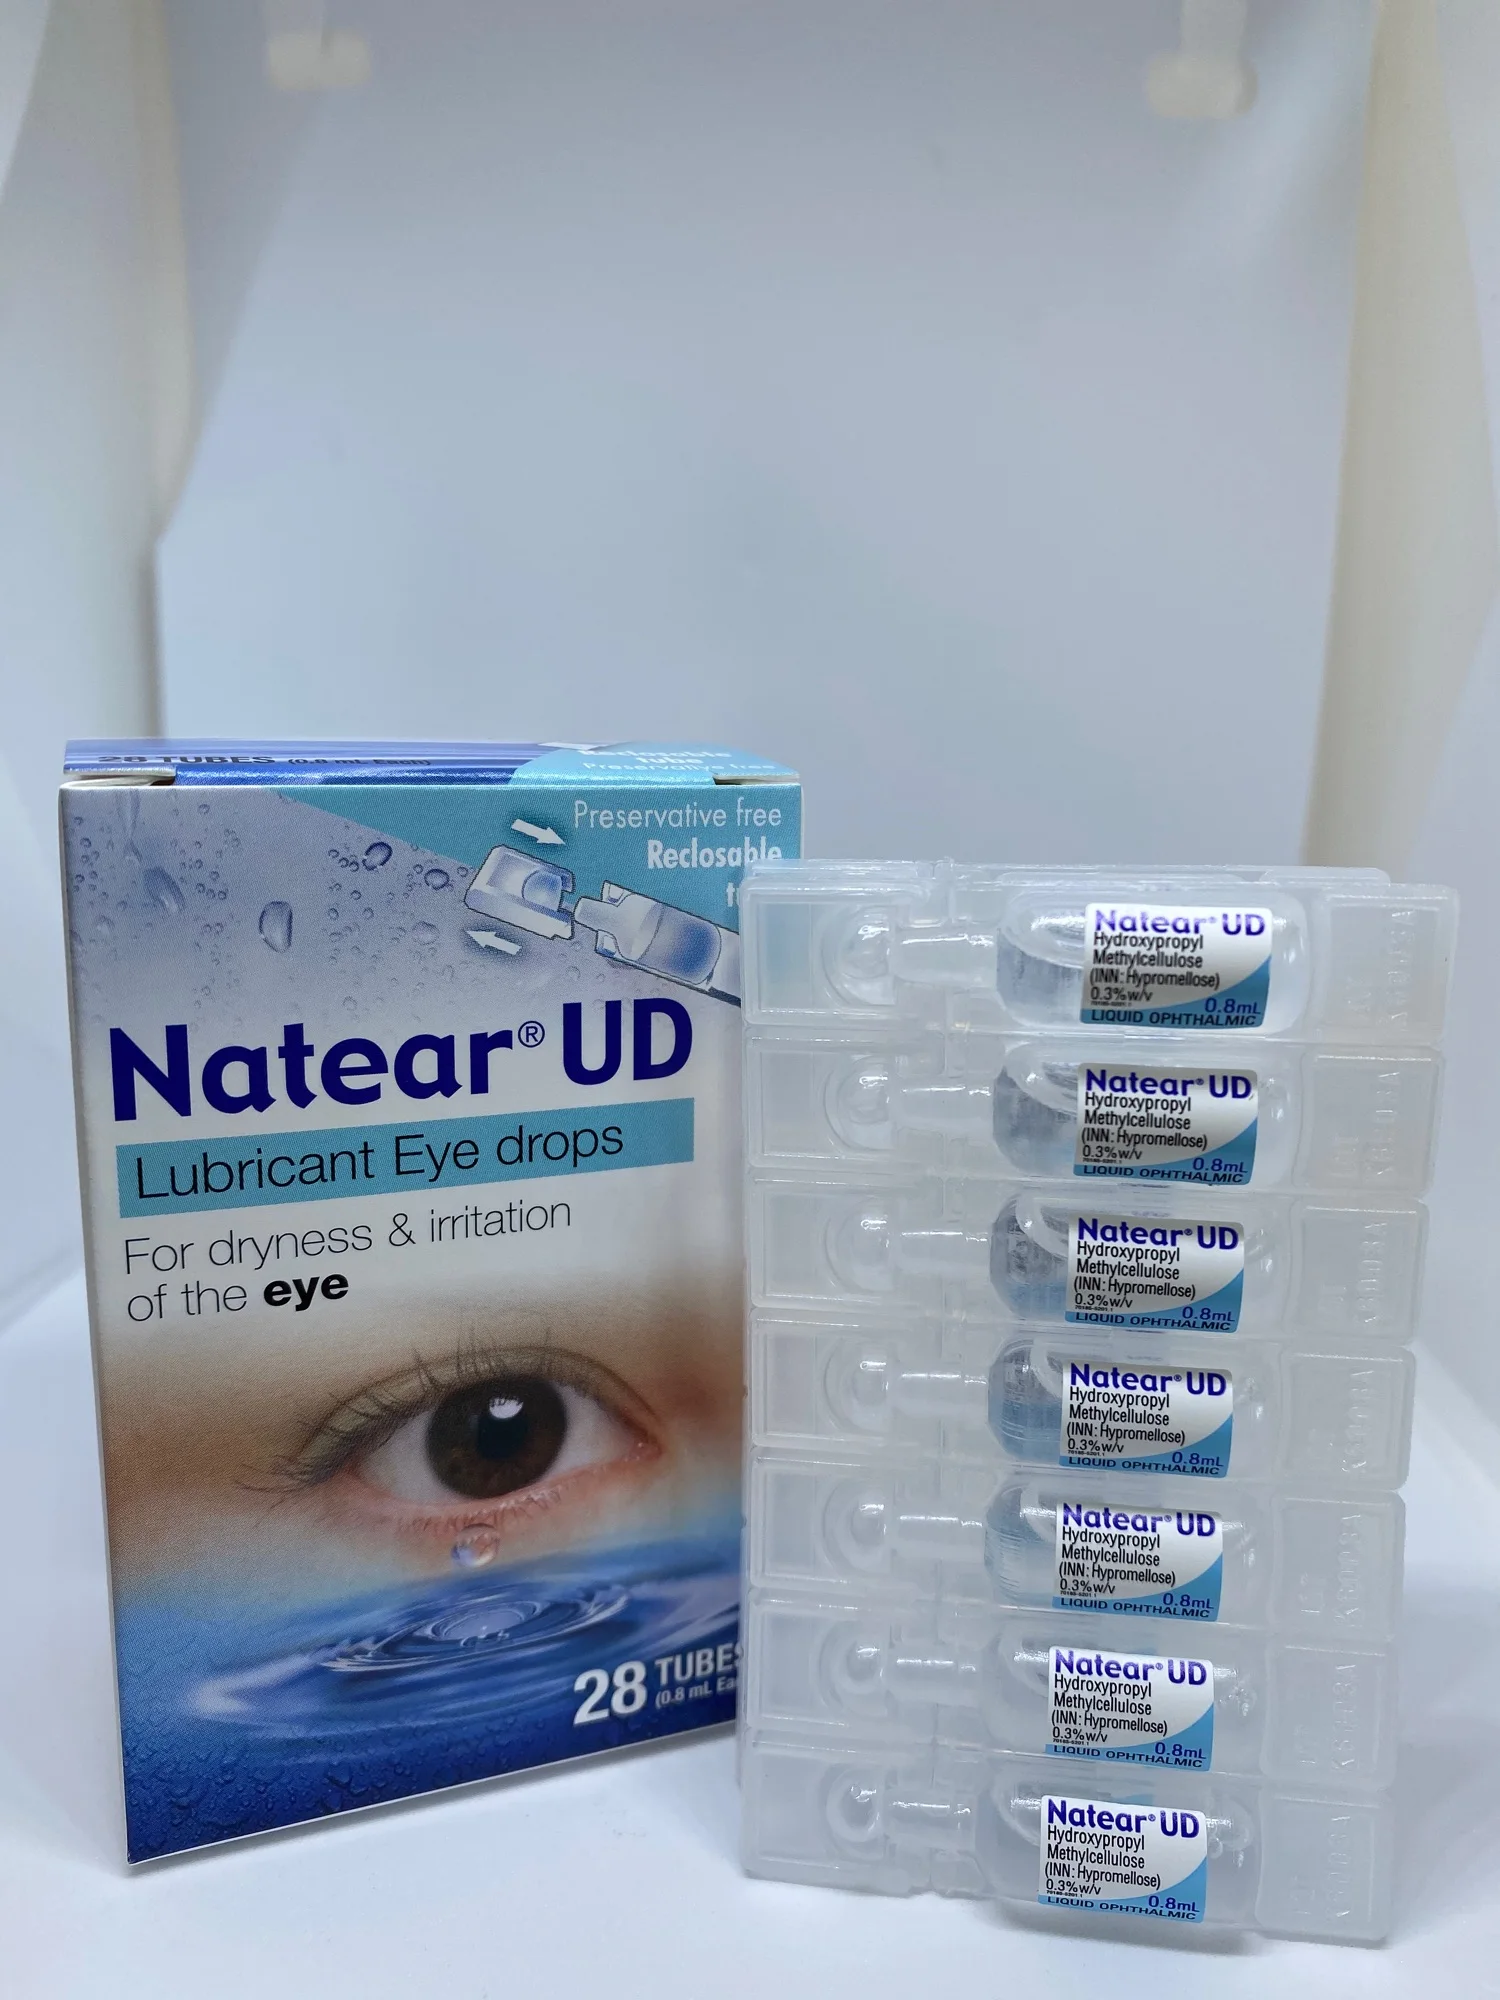 Natear UD 28 หลอด น้ำตาเทียม ไม่มีสารกันเสีย ปริมาตร 0.8 ml 28 ชิ้น exp 08/2022